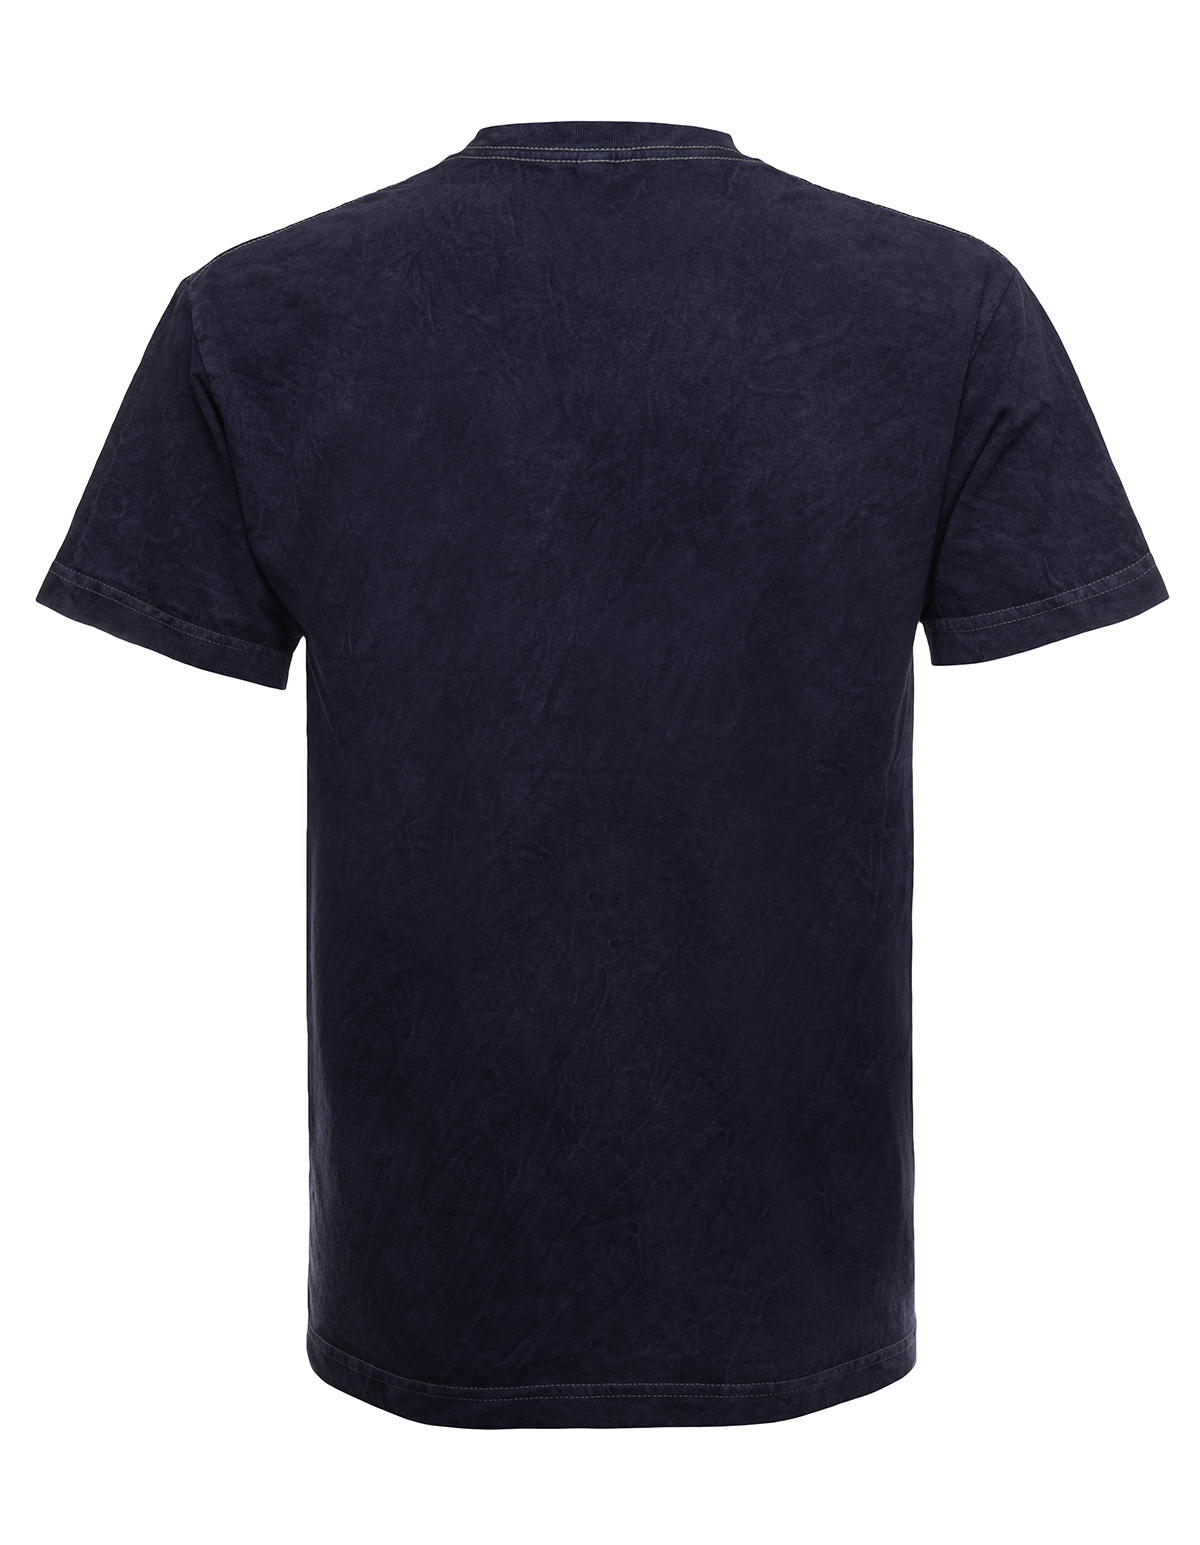 13 Mineral - Mineralwash Ocean Back T-shirt